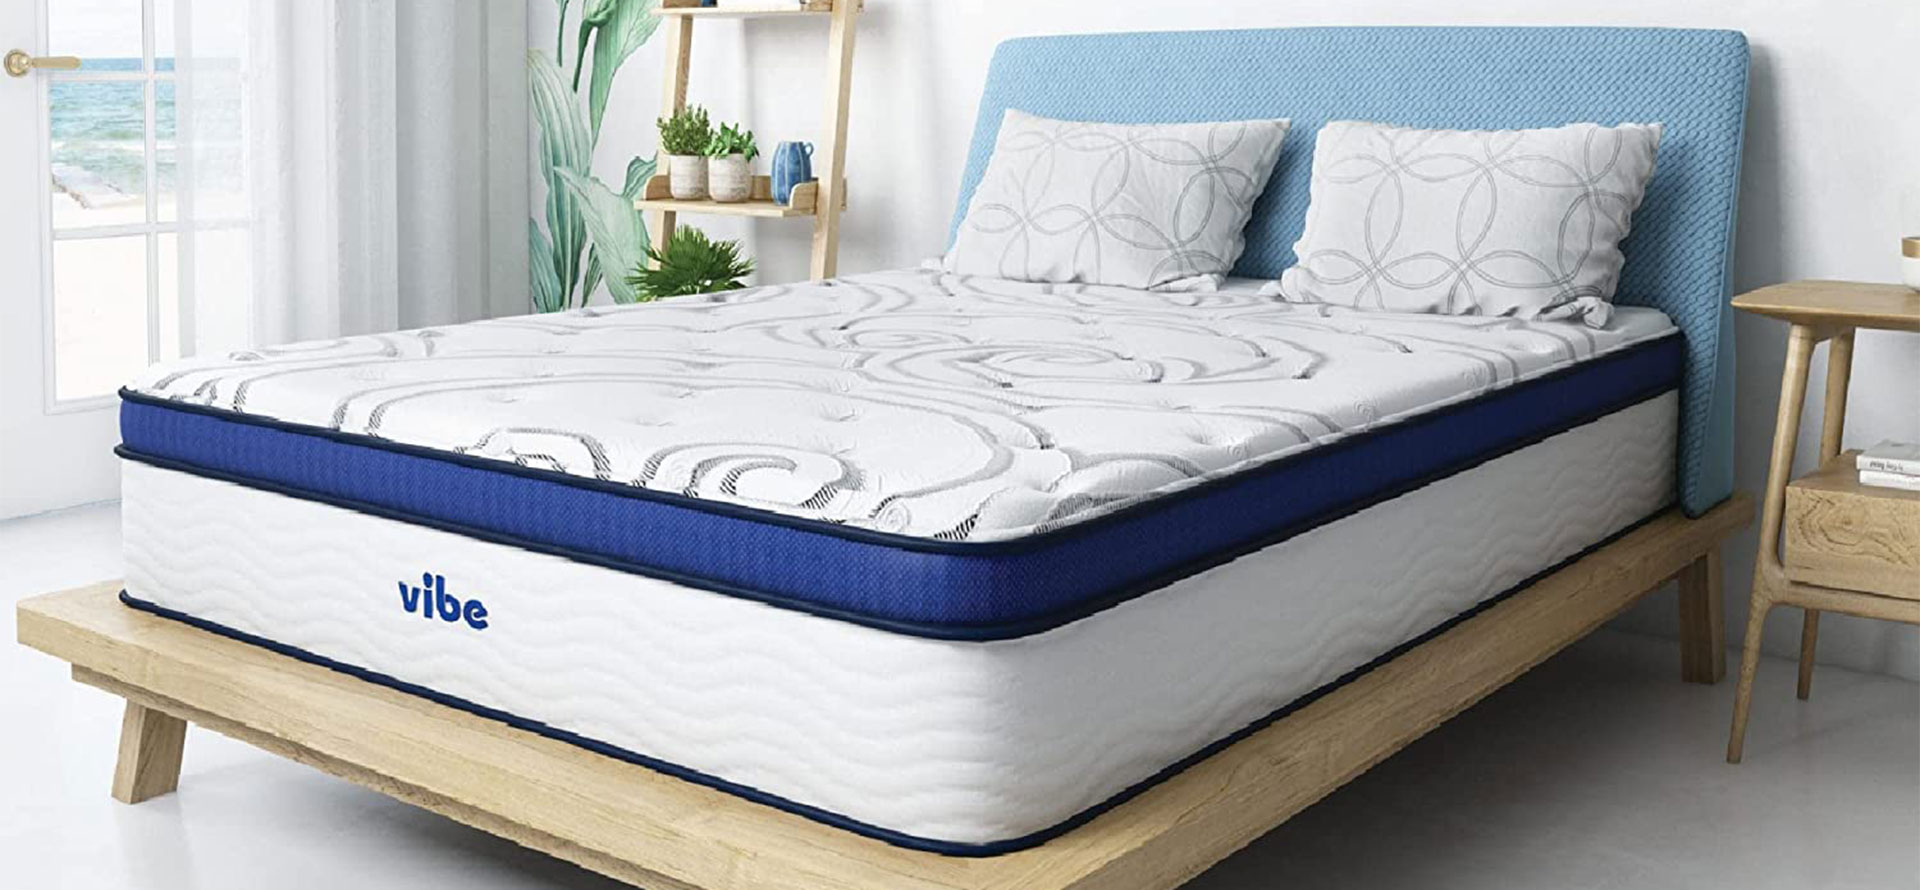 Vibe mattress on bed.